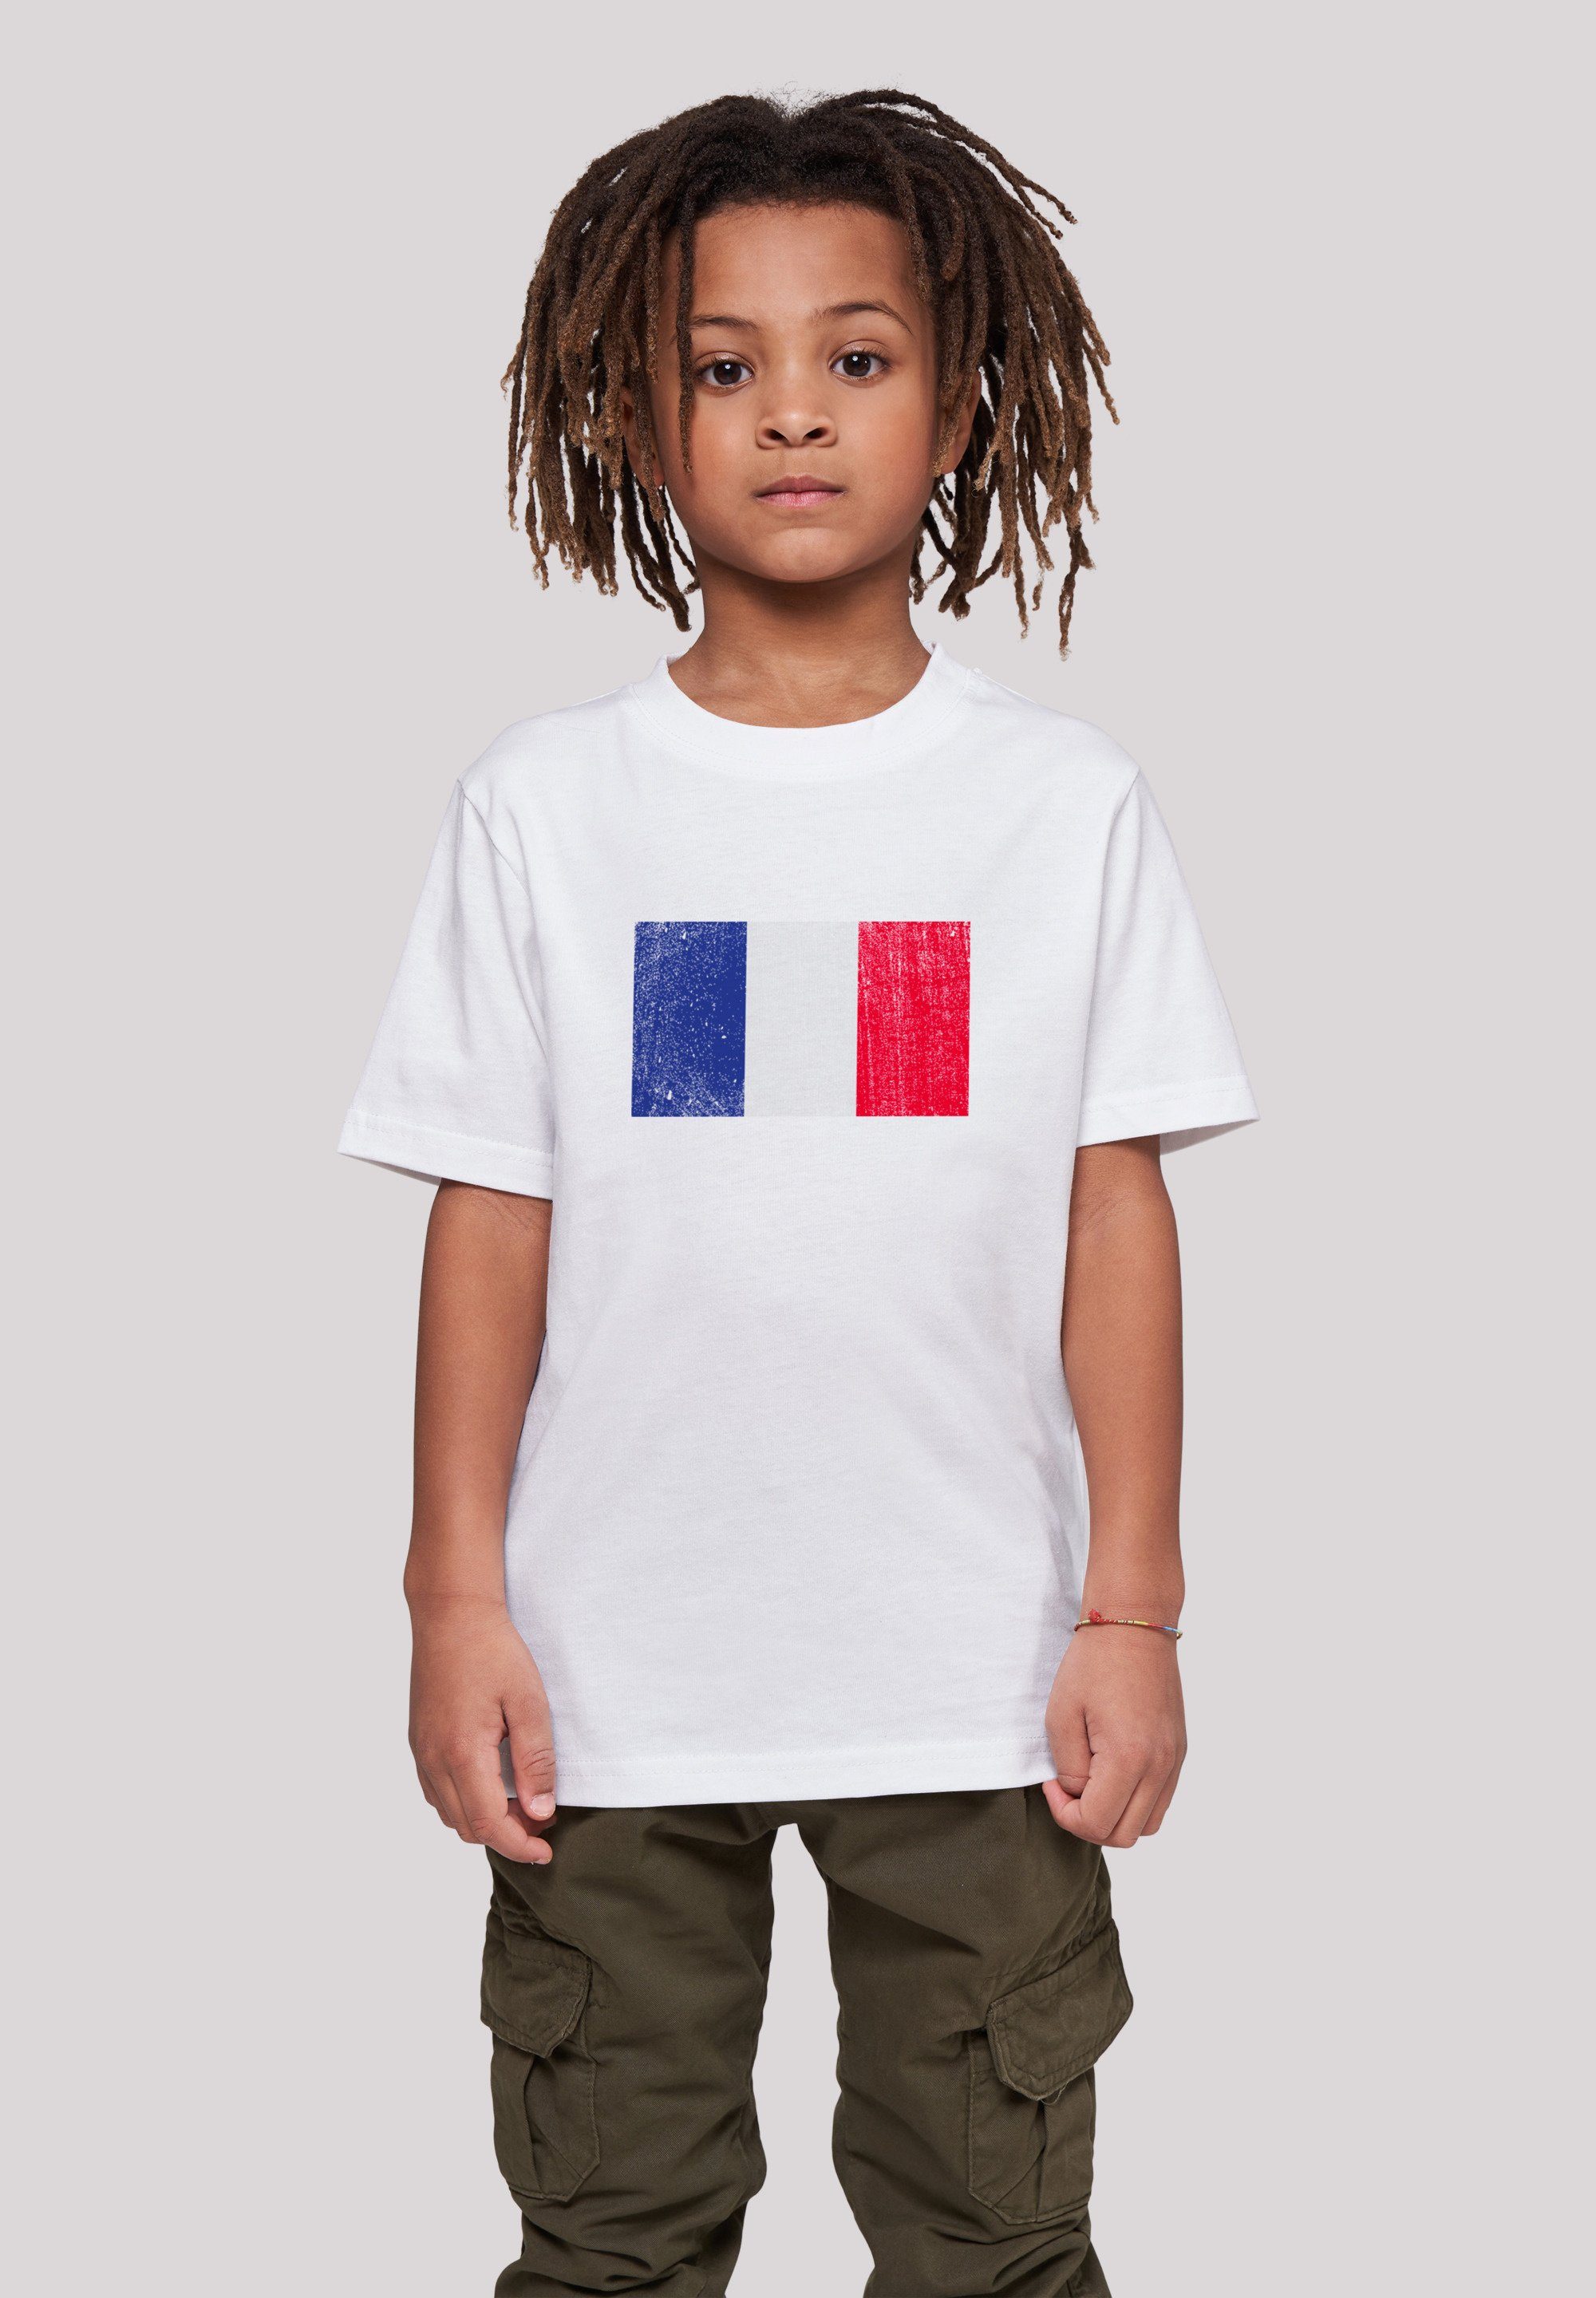 F4NT4STIC T-Shirt Größe distressed cm 145 trägt und Model Flagge Das Print, groß France Frankreich ist 145/152